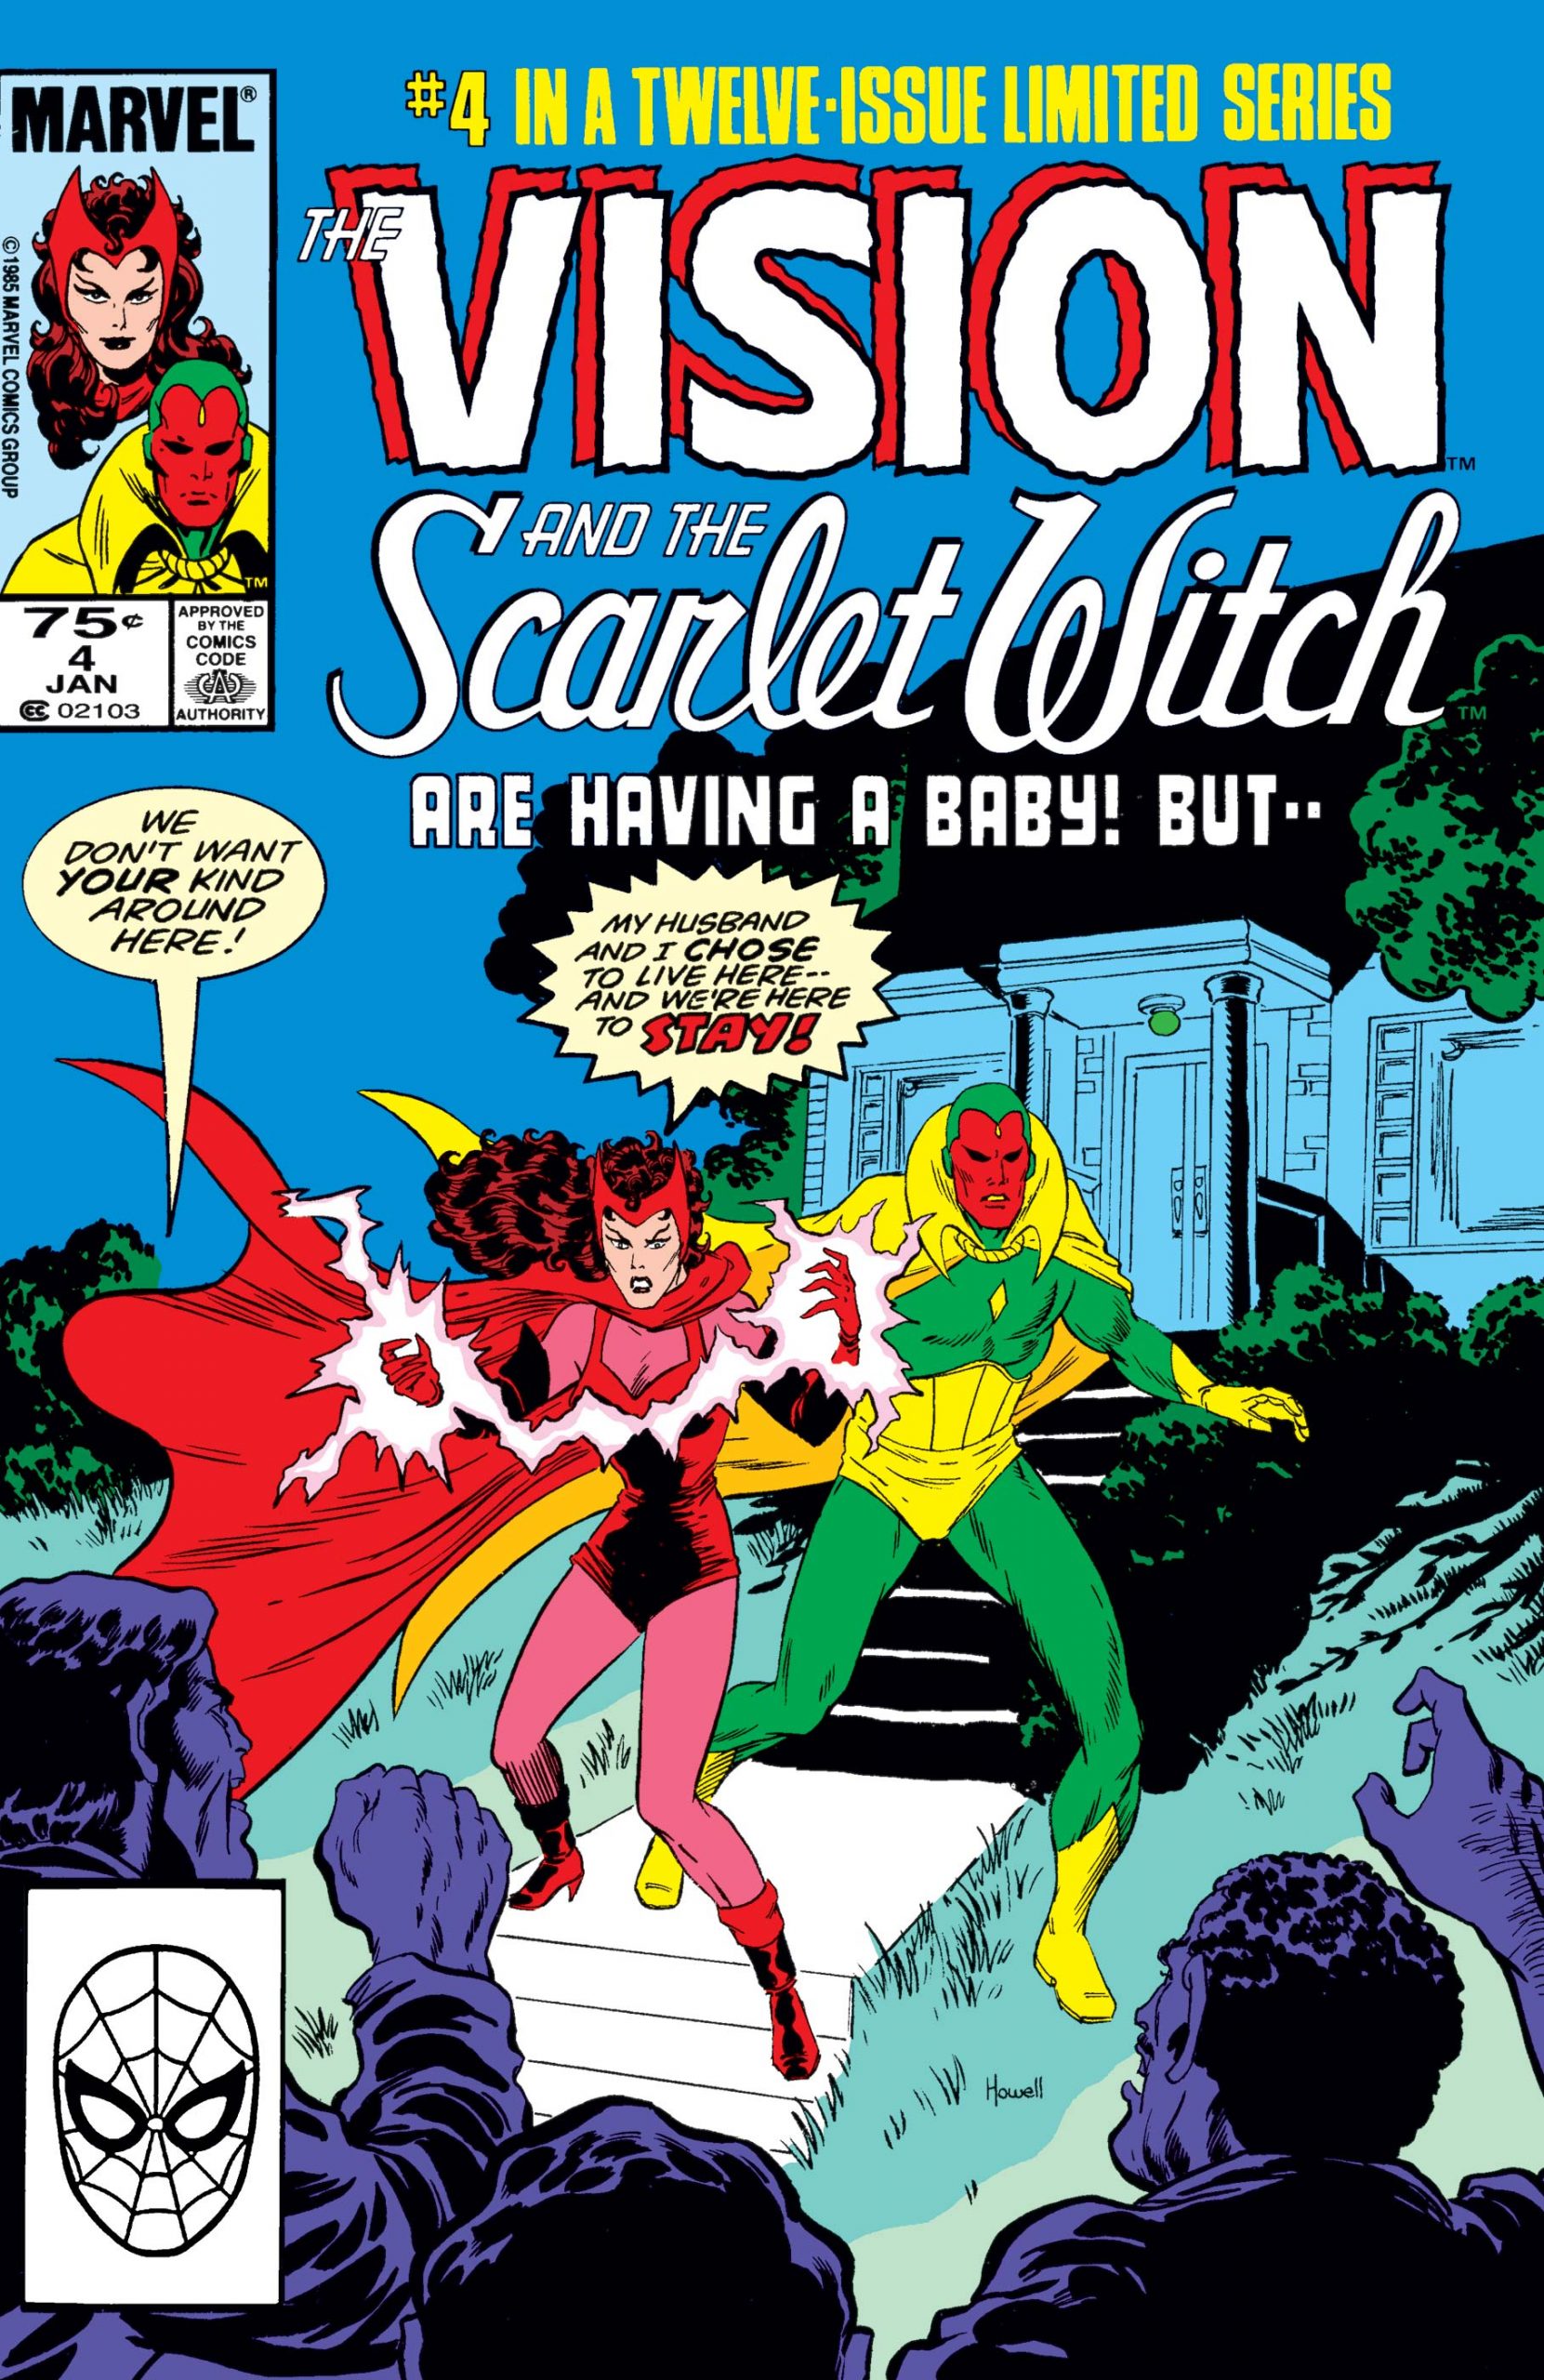 Wanda and Vision in the comics